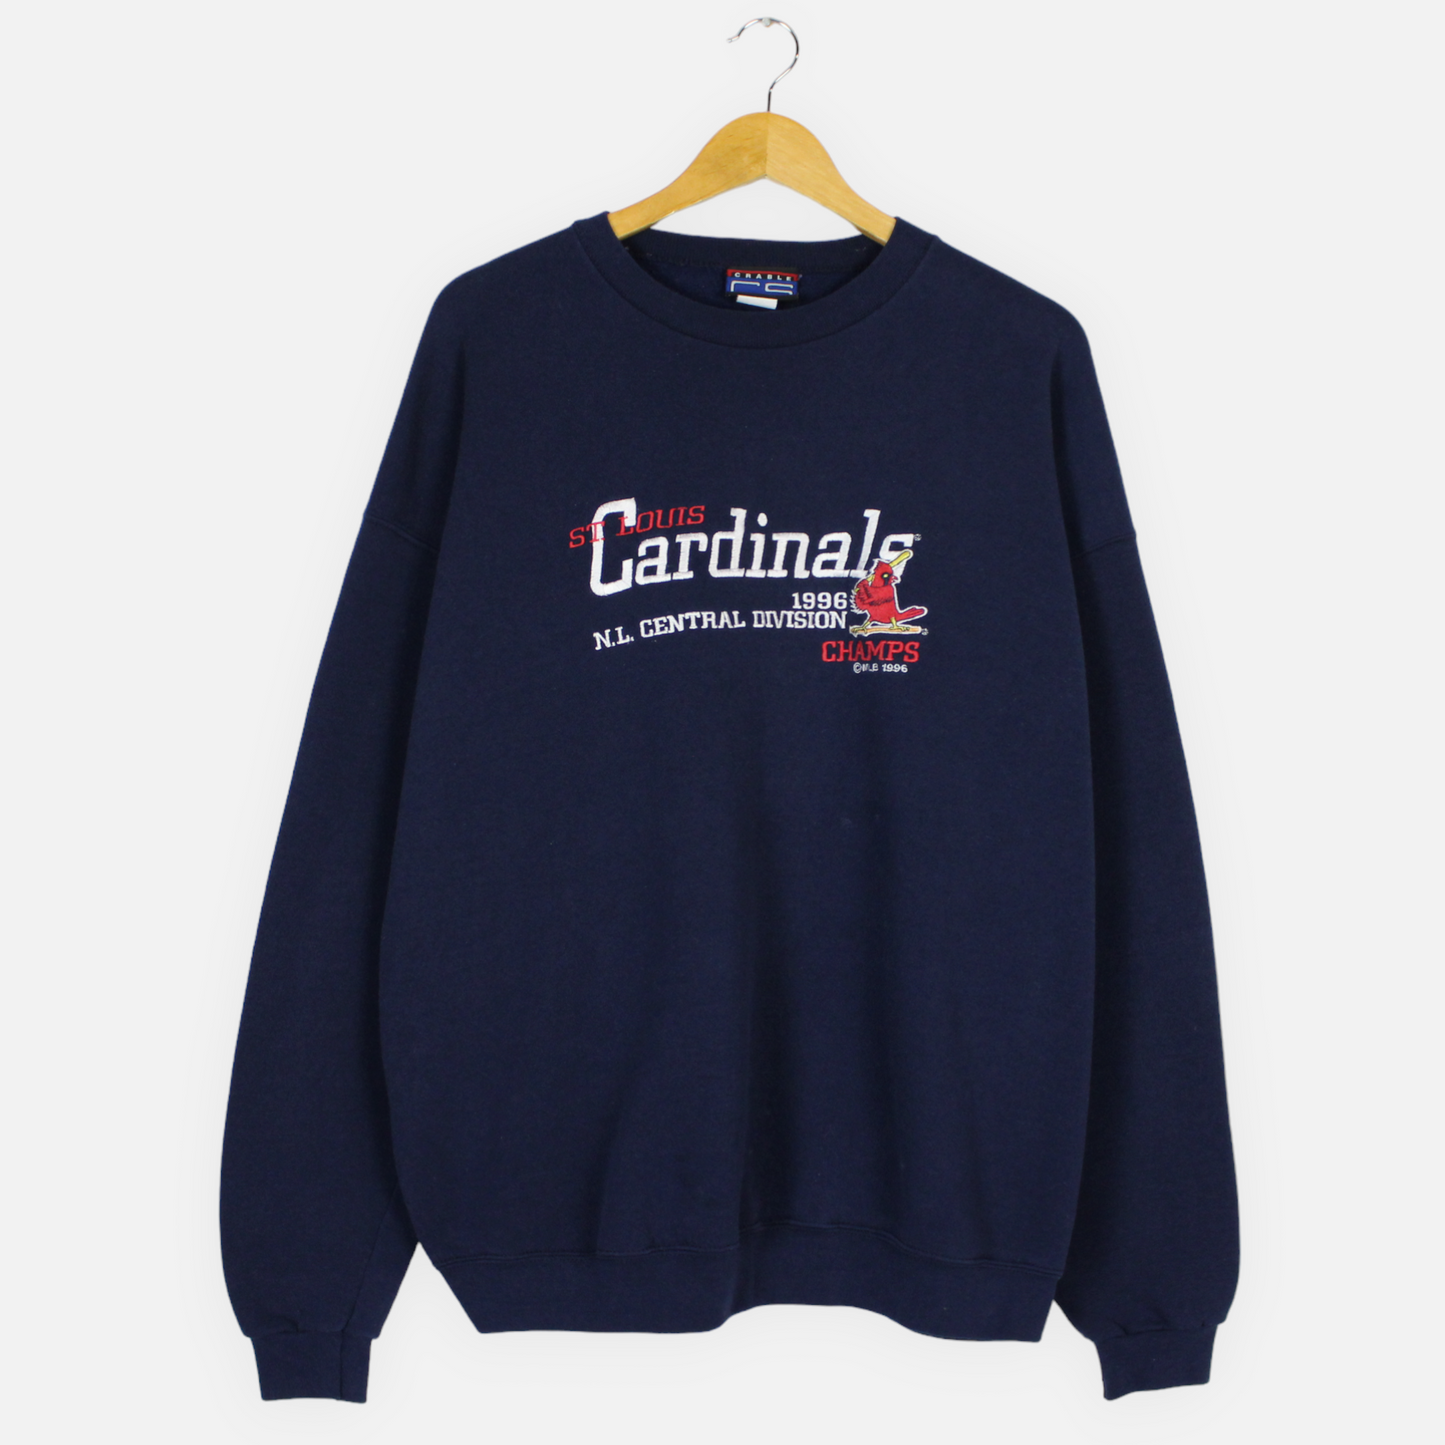 Vintage 1996 St Louis Cardinals MLB Sweatshirt - XL